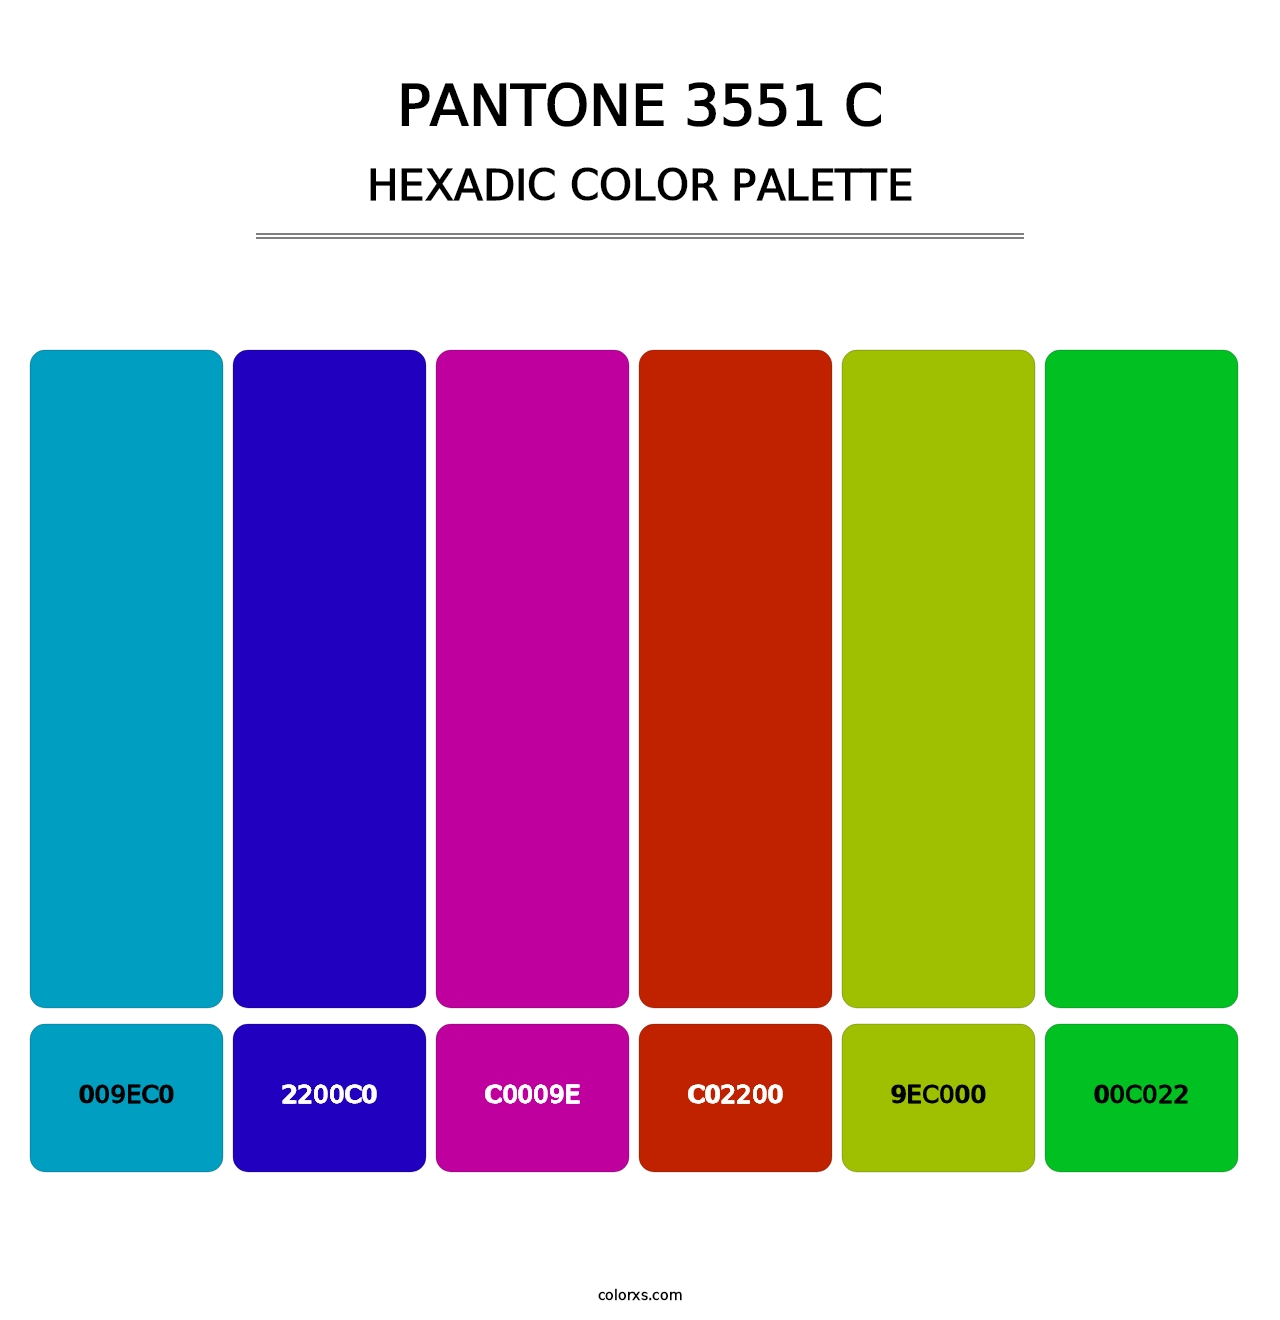 PANTONE 3551 C - Hexadic Color Palette